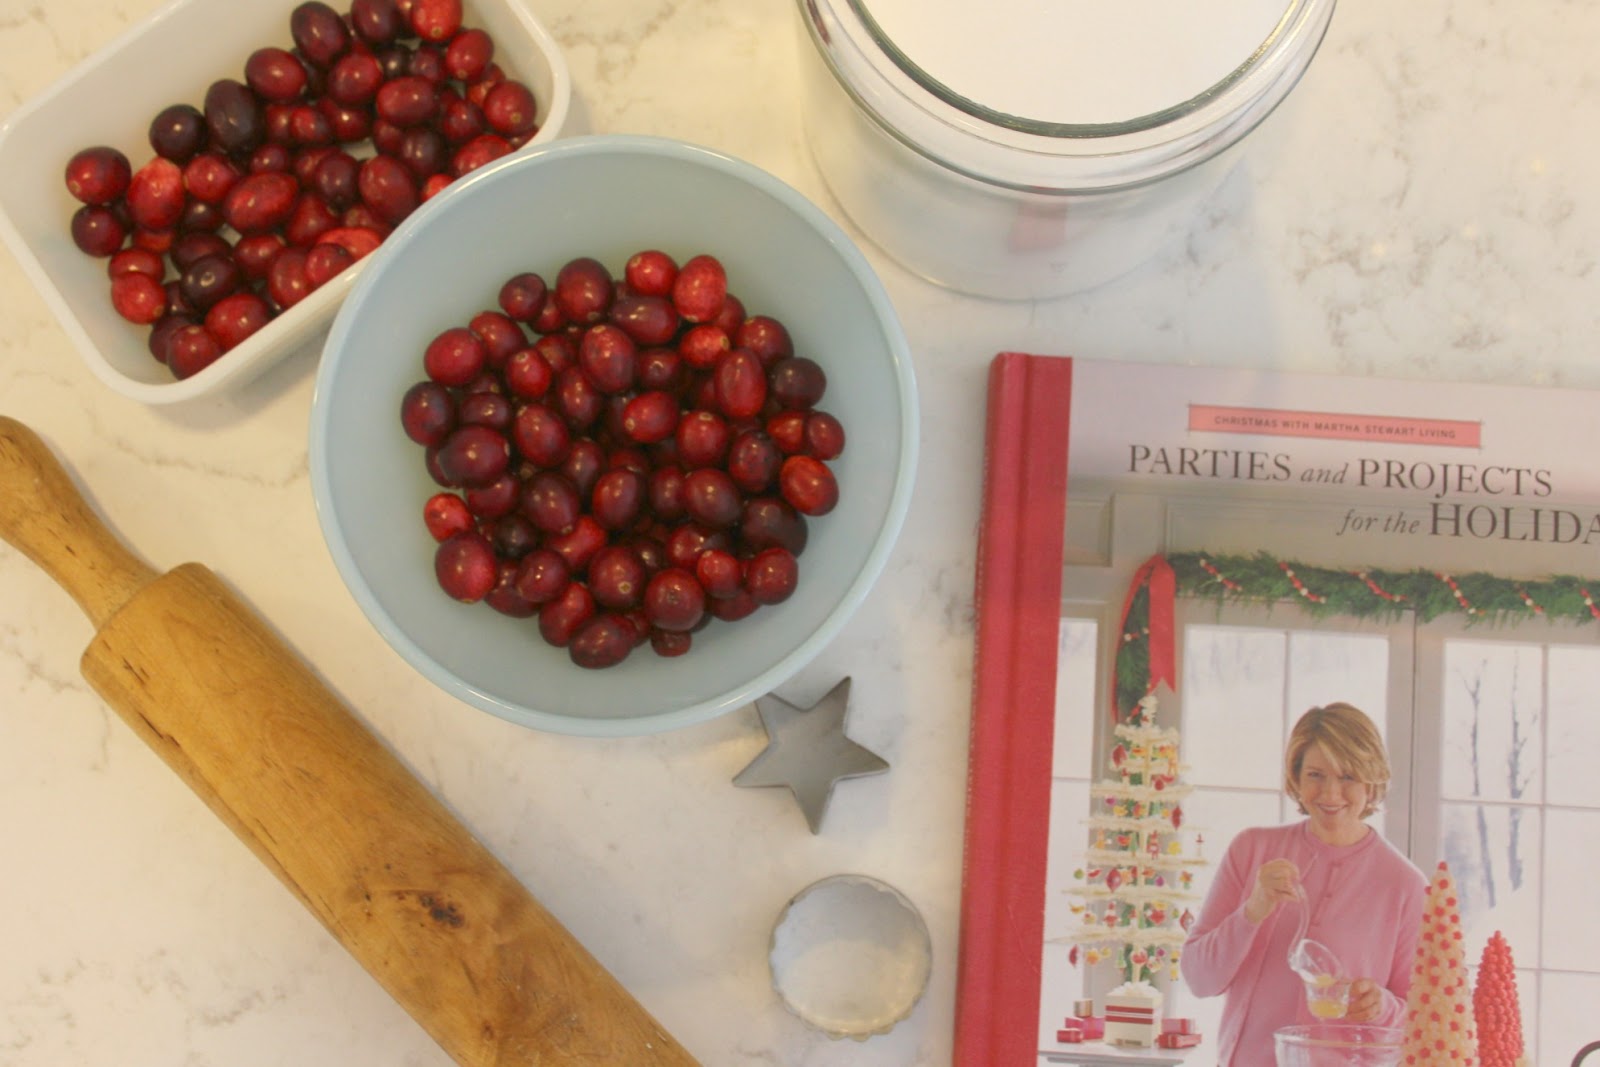 image result for vintage bowls baking holiday rolling pin cranberries martha stewart book